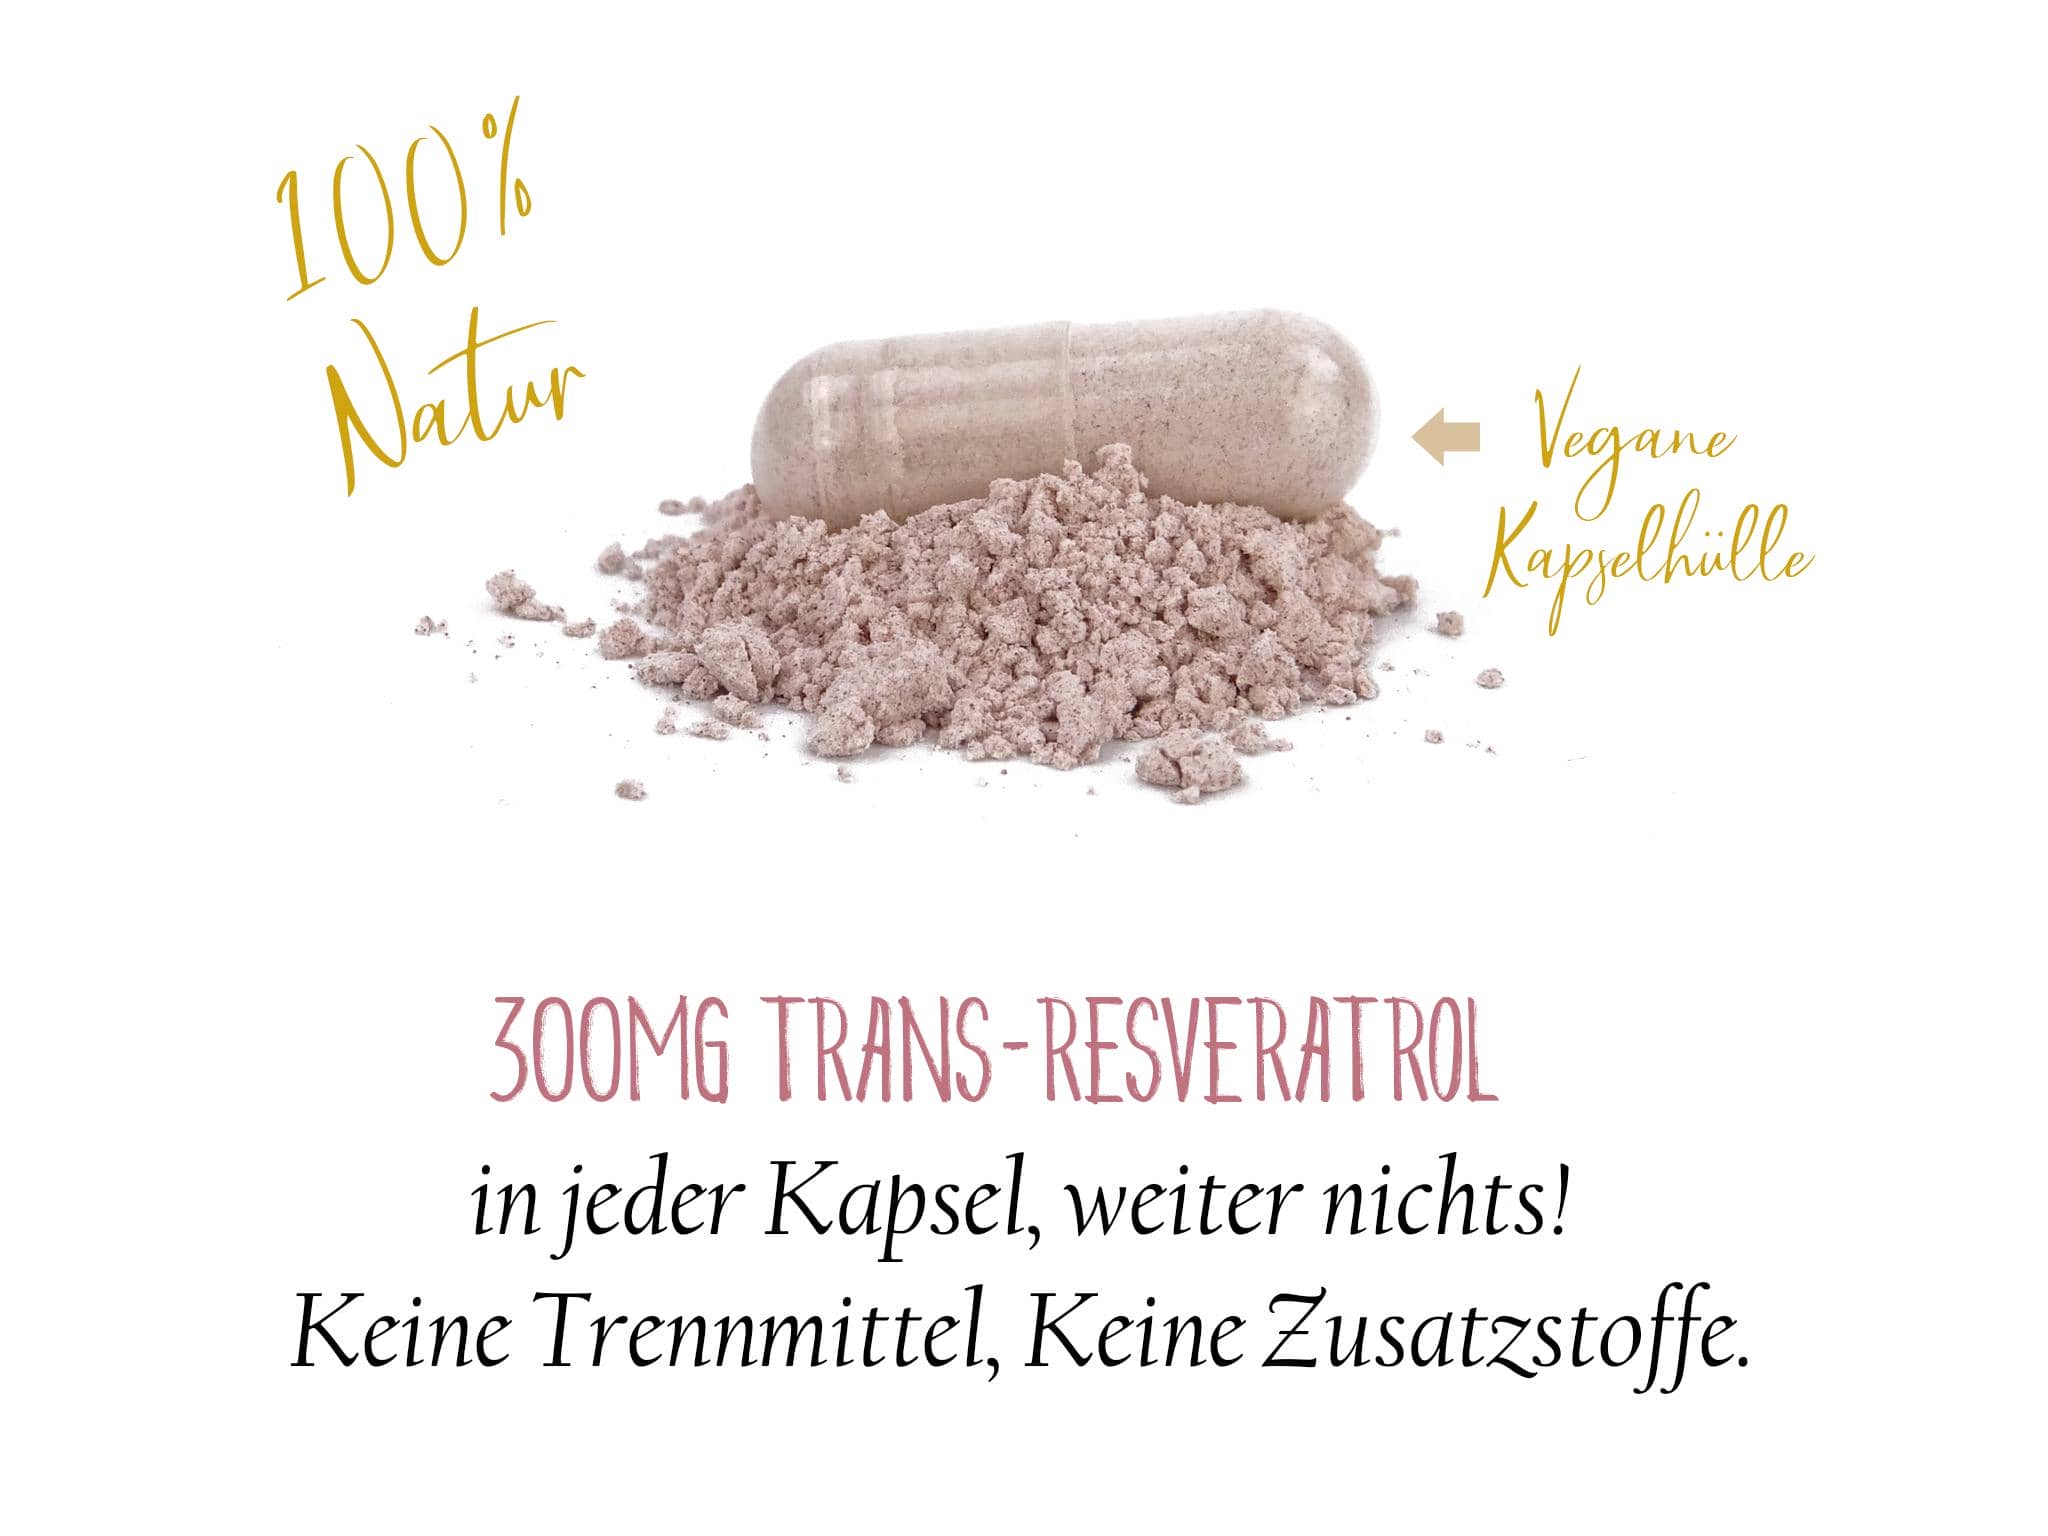 trans-Resveratrol PLUS Kapseln (Doppelpack 2x 120 Kapseln im Glas) Vegan & Glutenfrei - 300mg reines 98% trans-Resveratrol und OPC